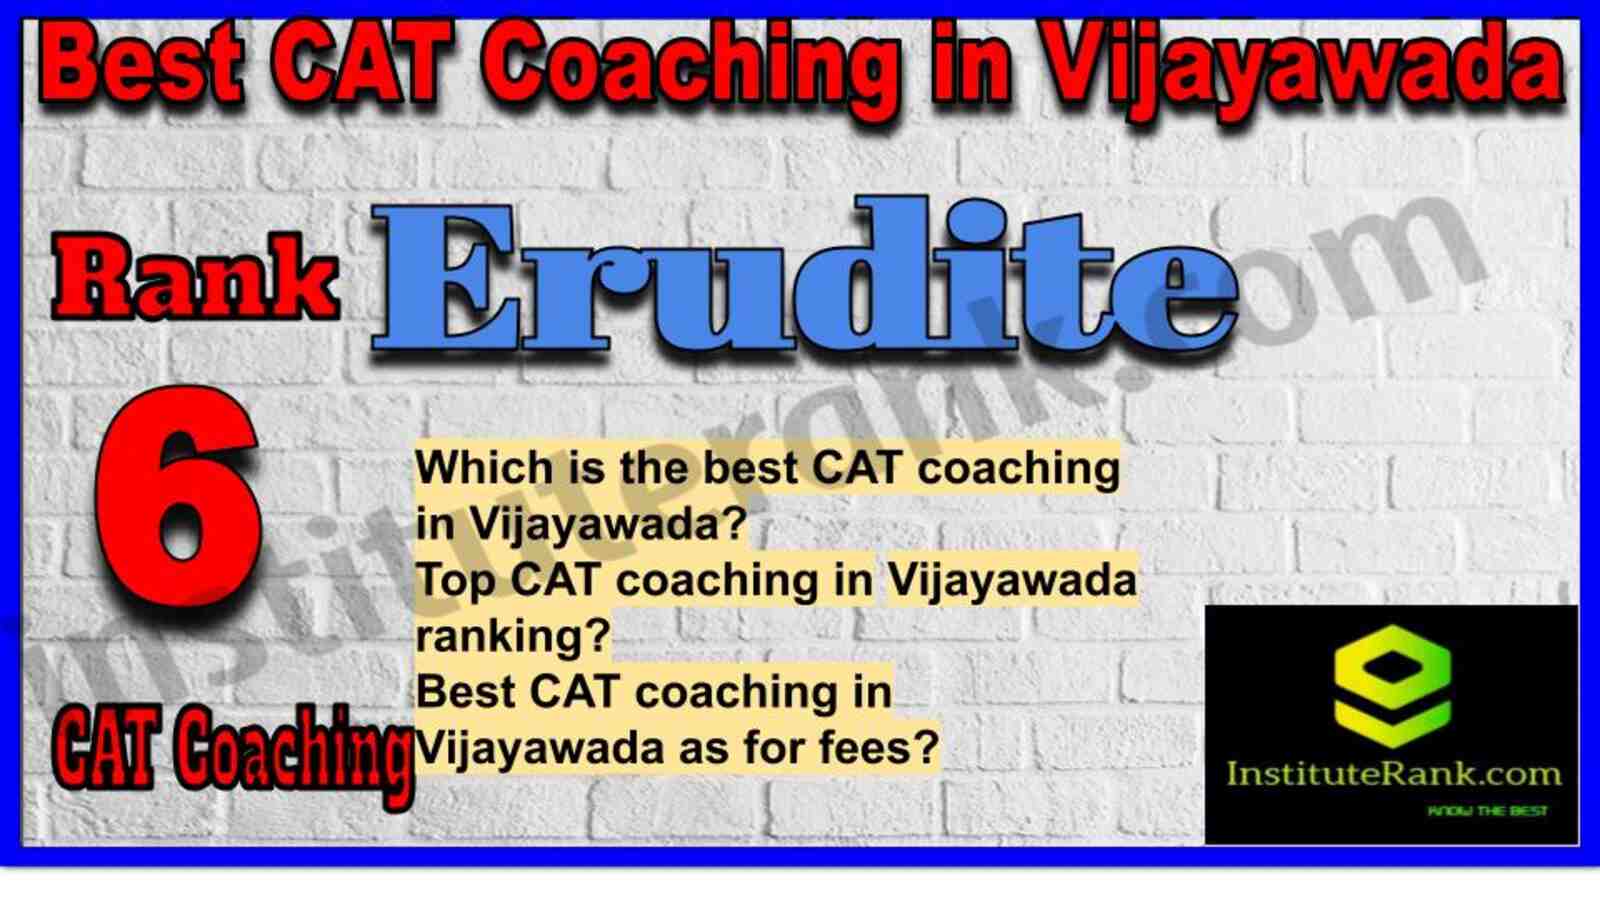 Rank 6. Erudite Best CAT Coaching in Vijayawada